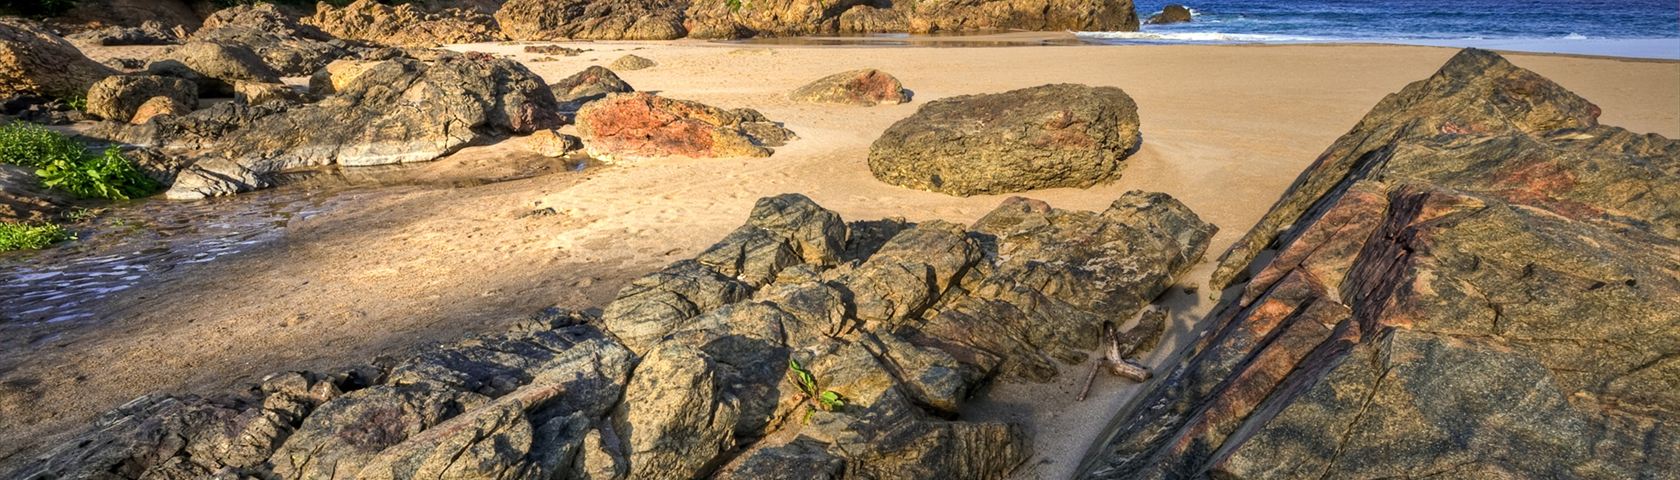 Rocks by the Beach